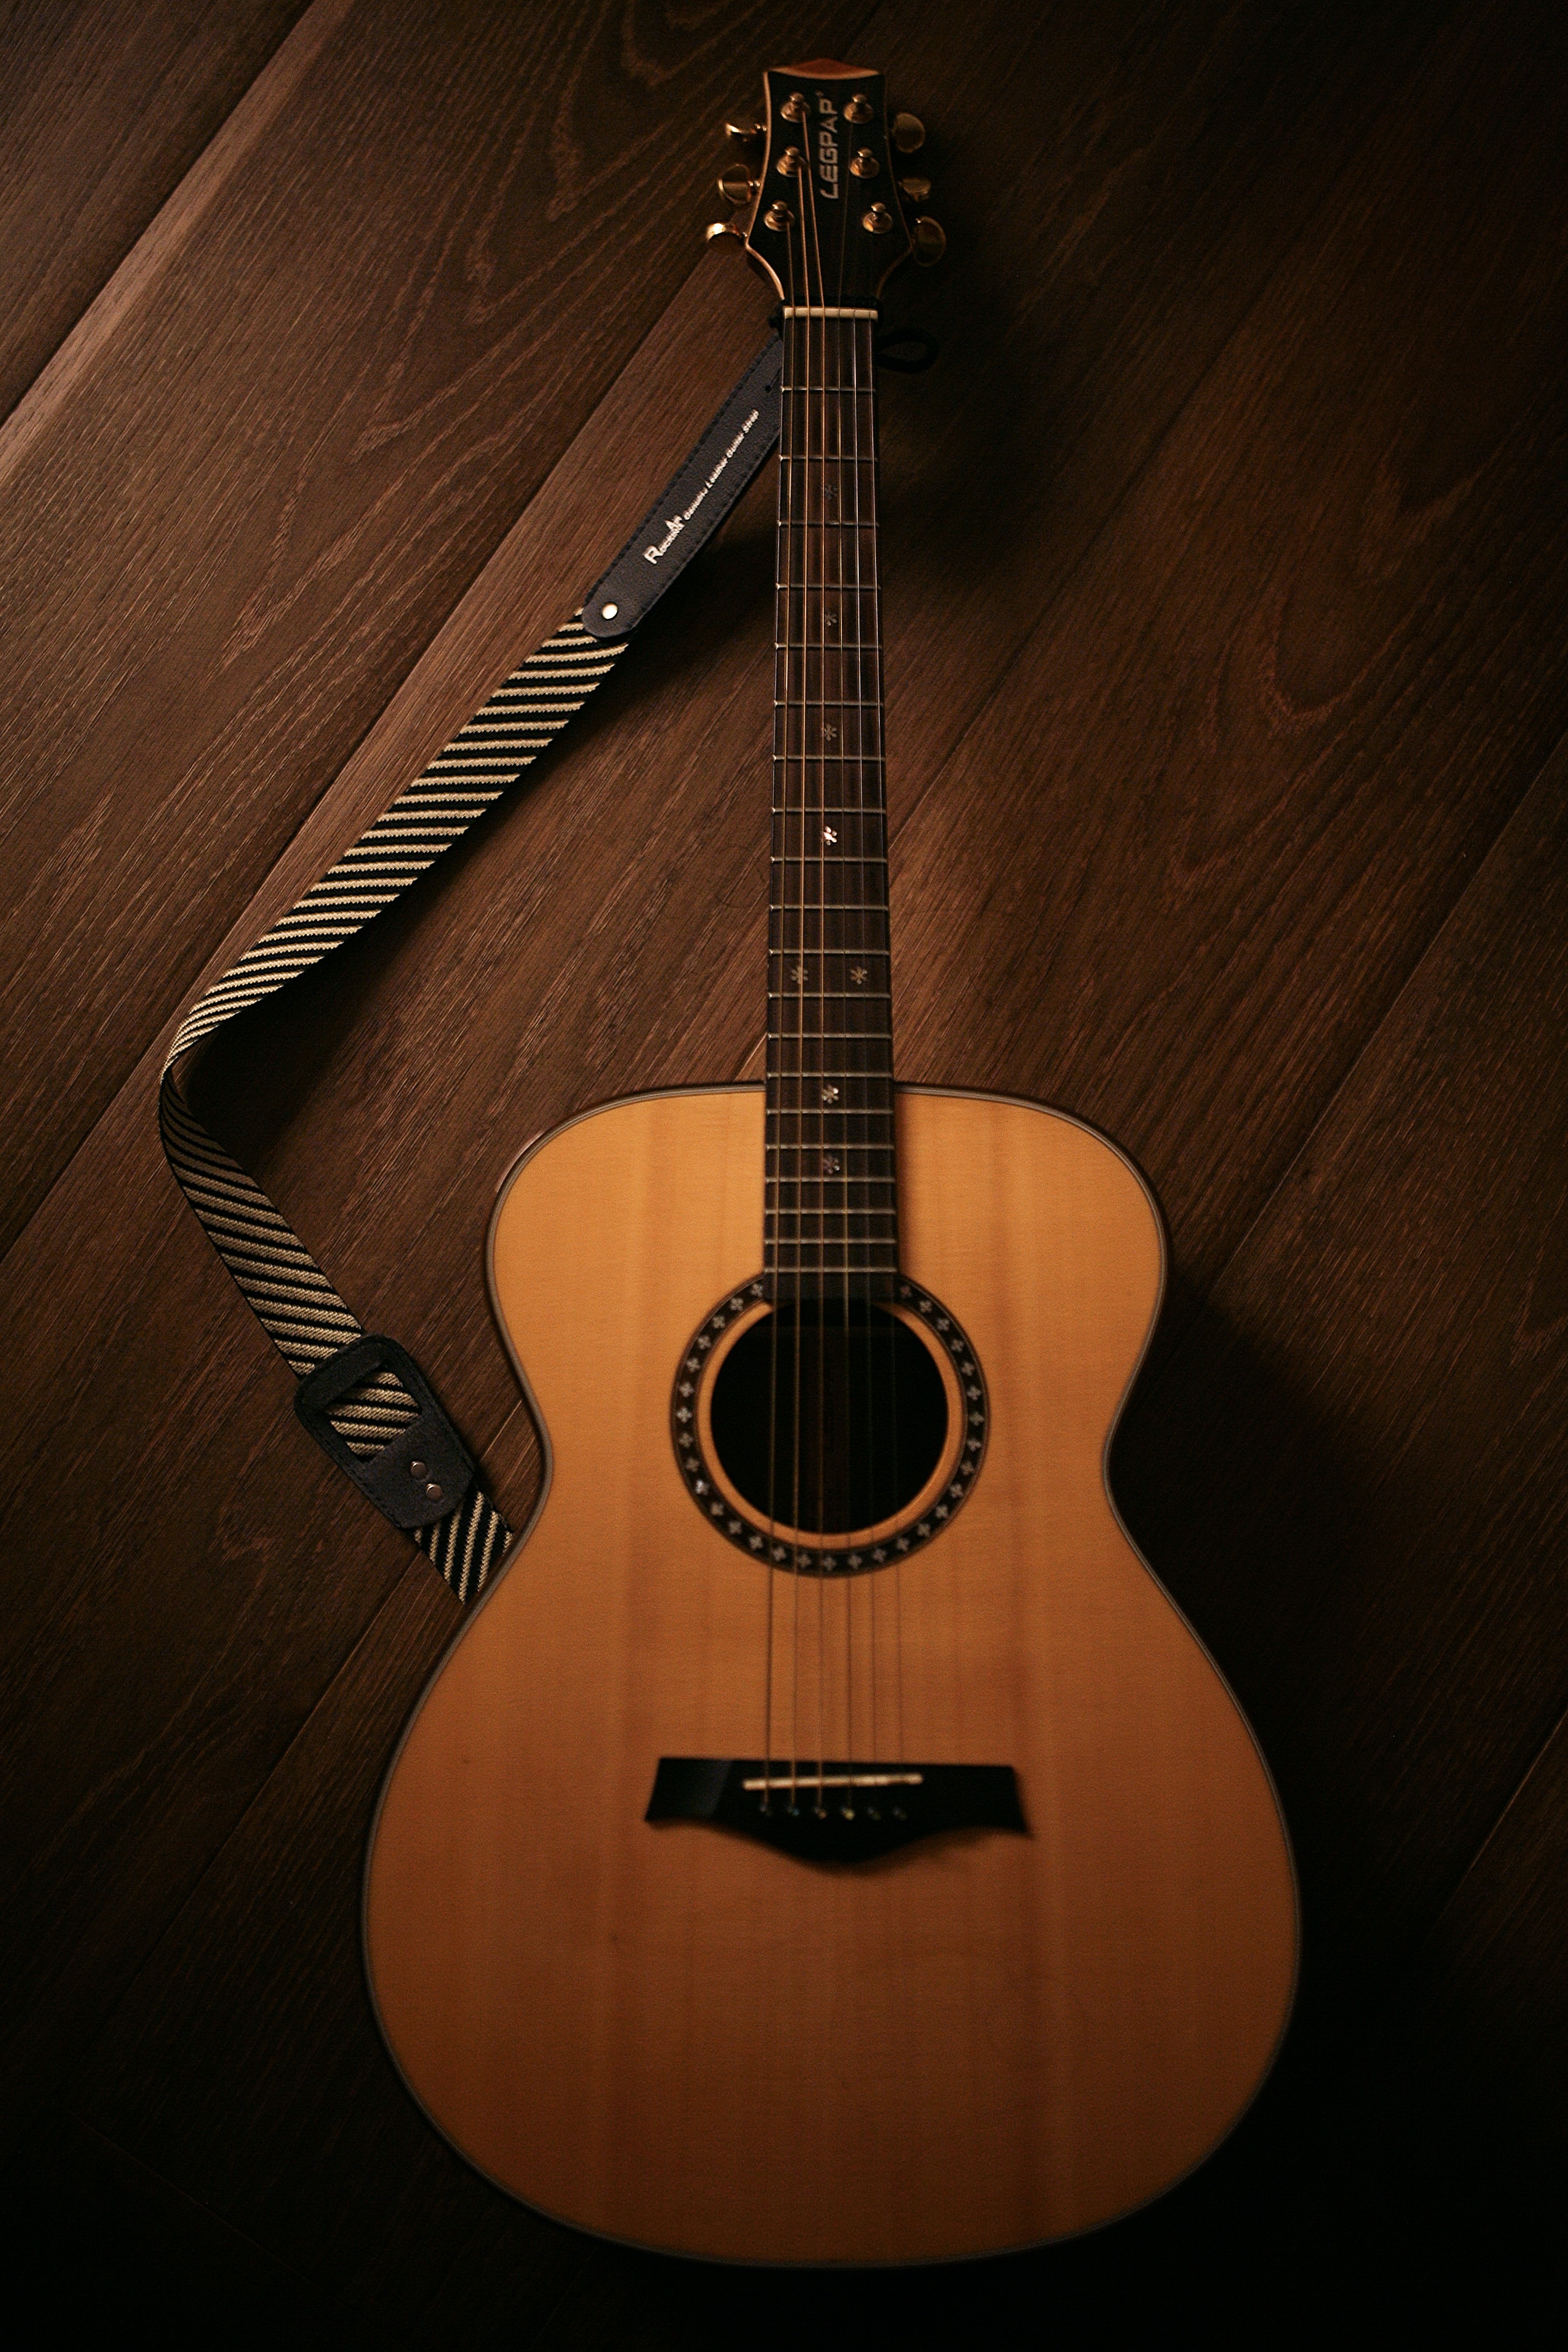 guitar, acoustic guitar, musical instrument, music, brown